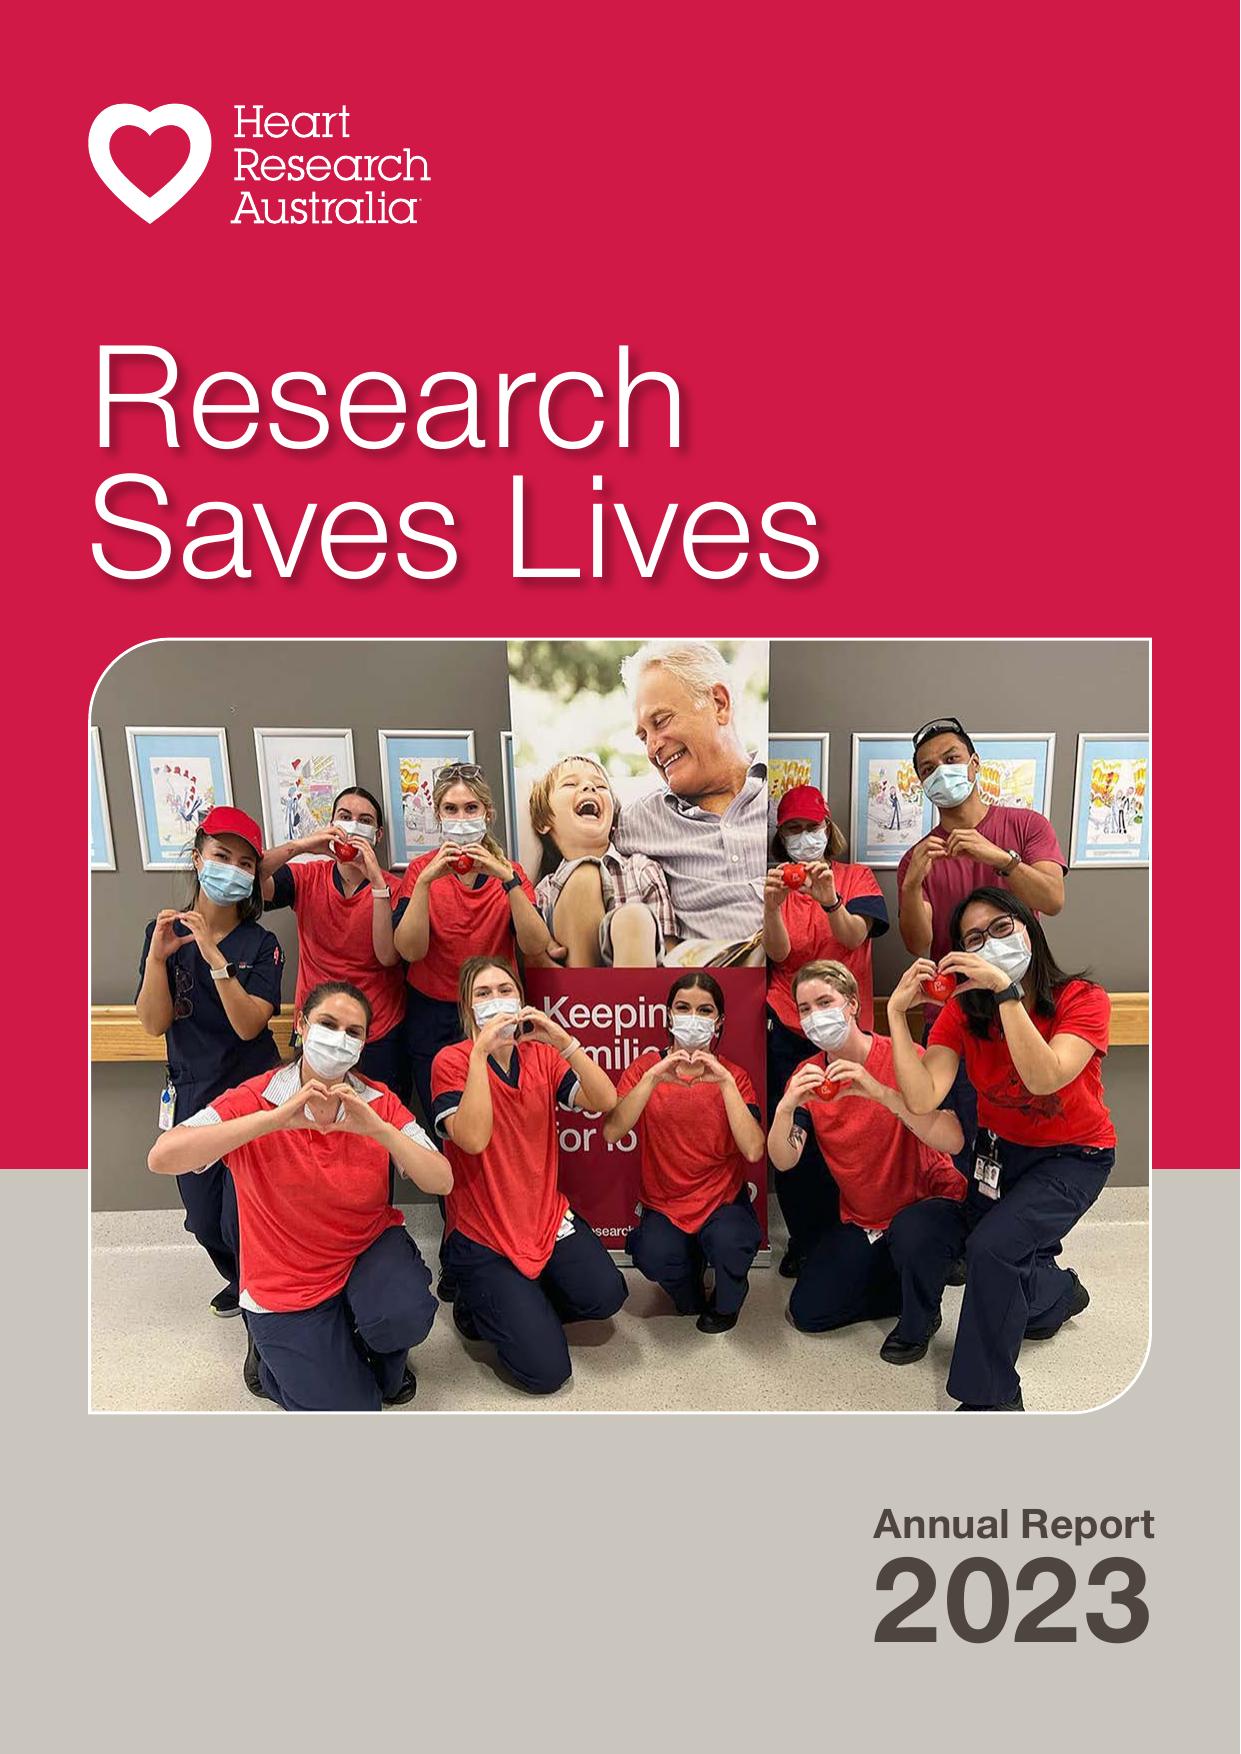 HEARTRESEARCH 2023 Annual Report